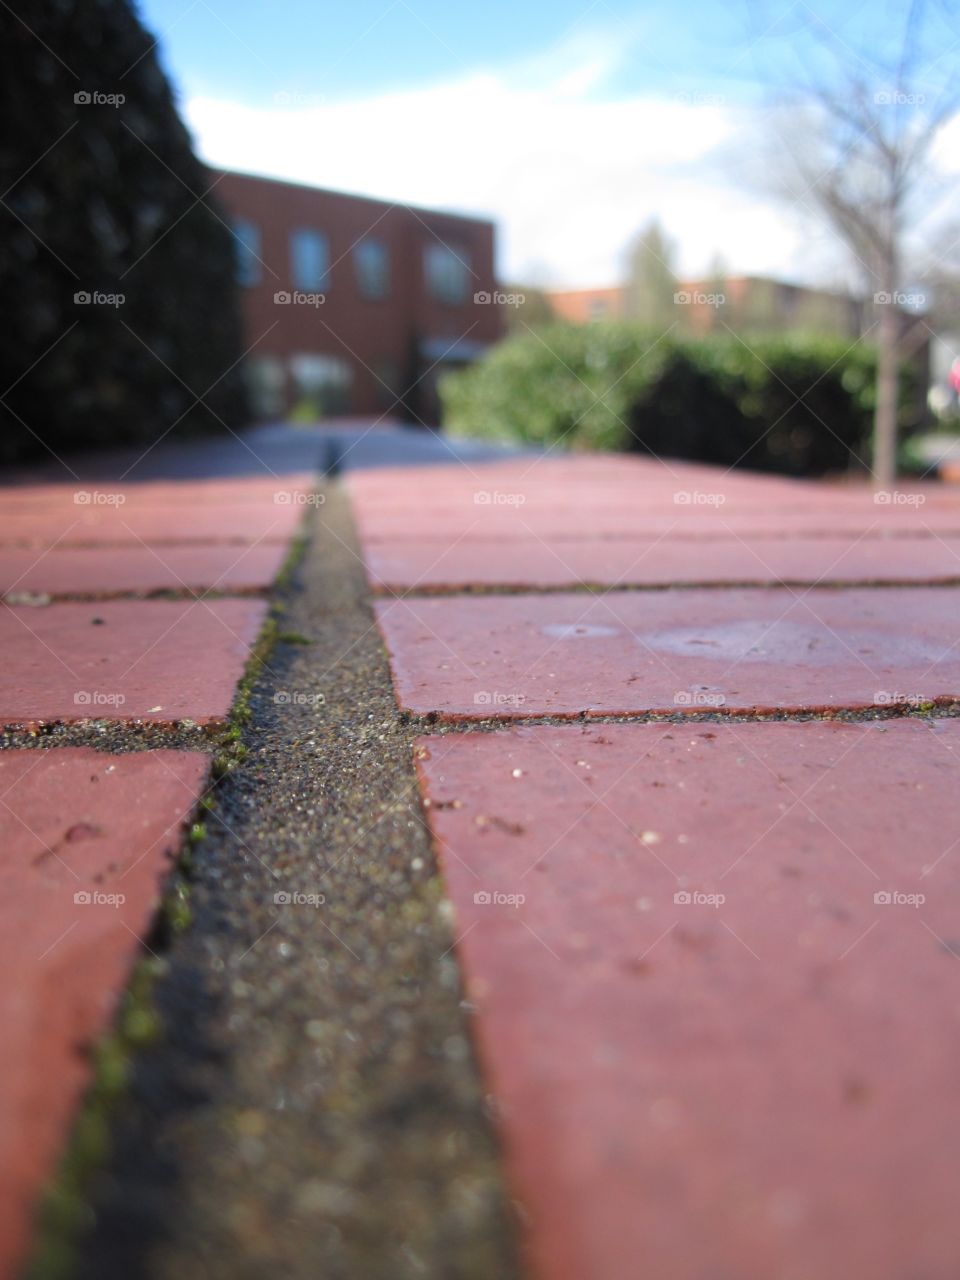 Closeup of brick path